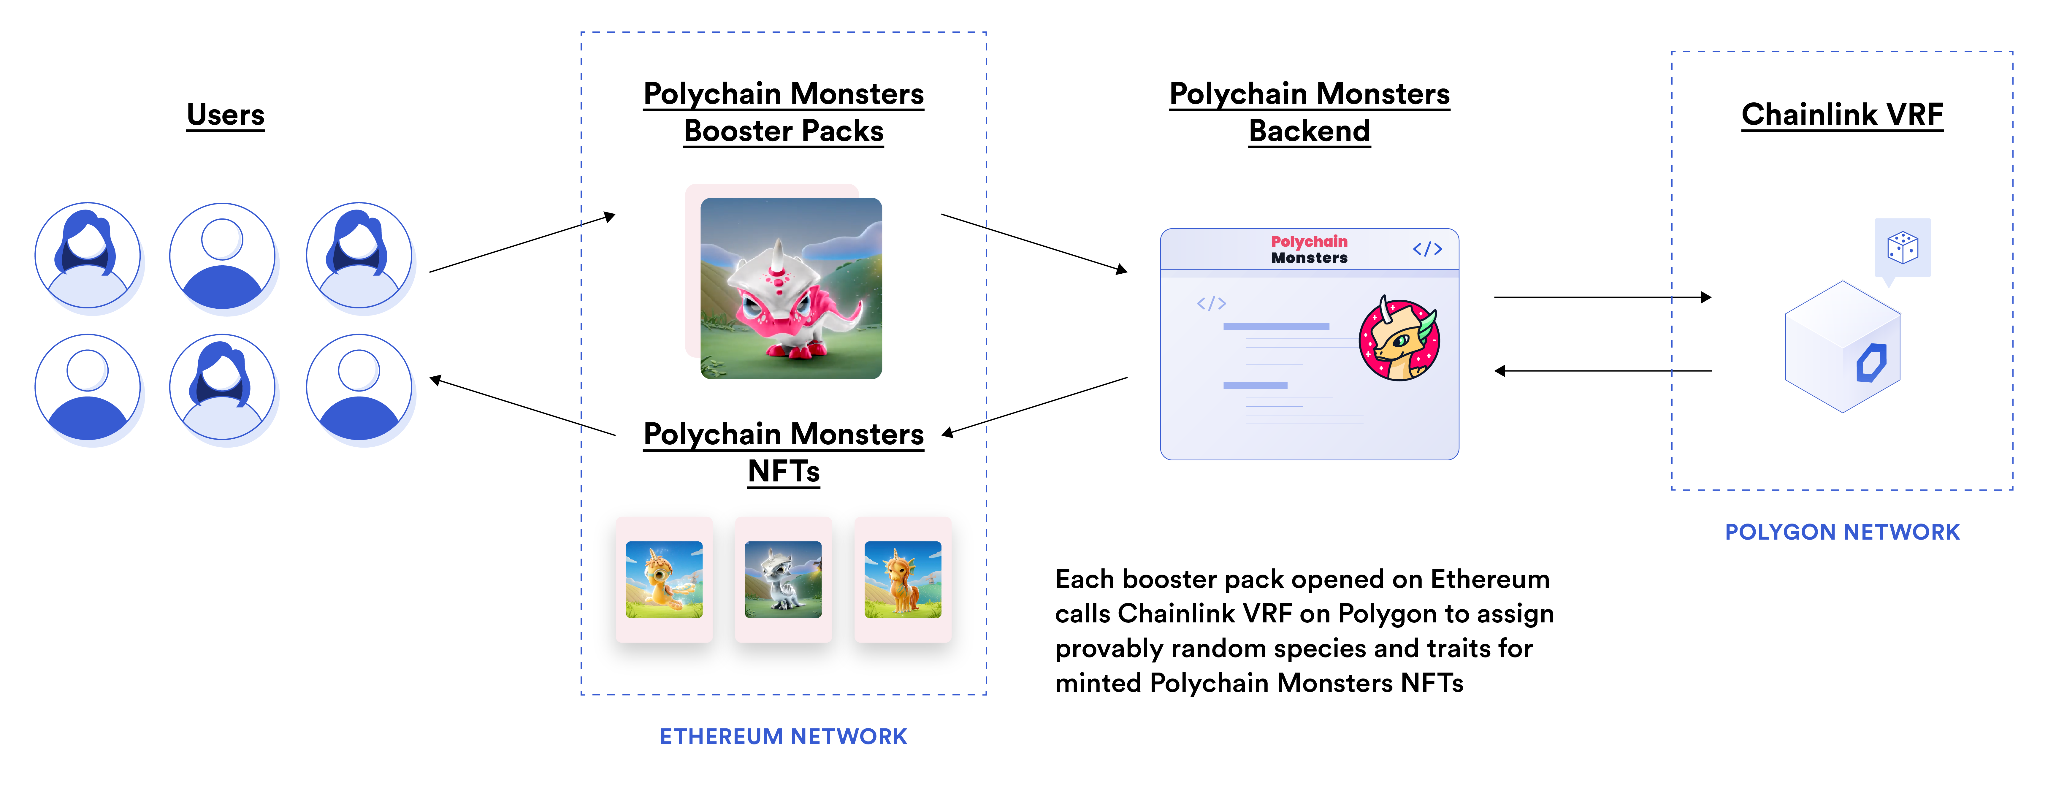 Polychain Monsters是一款区块链游戏，集成了Chainlink VRF铸造拥有随机属性和稀缺性的NFT。